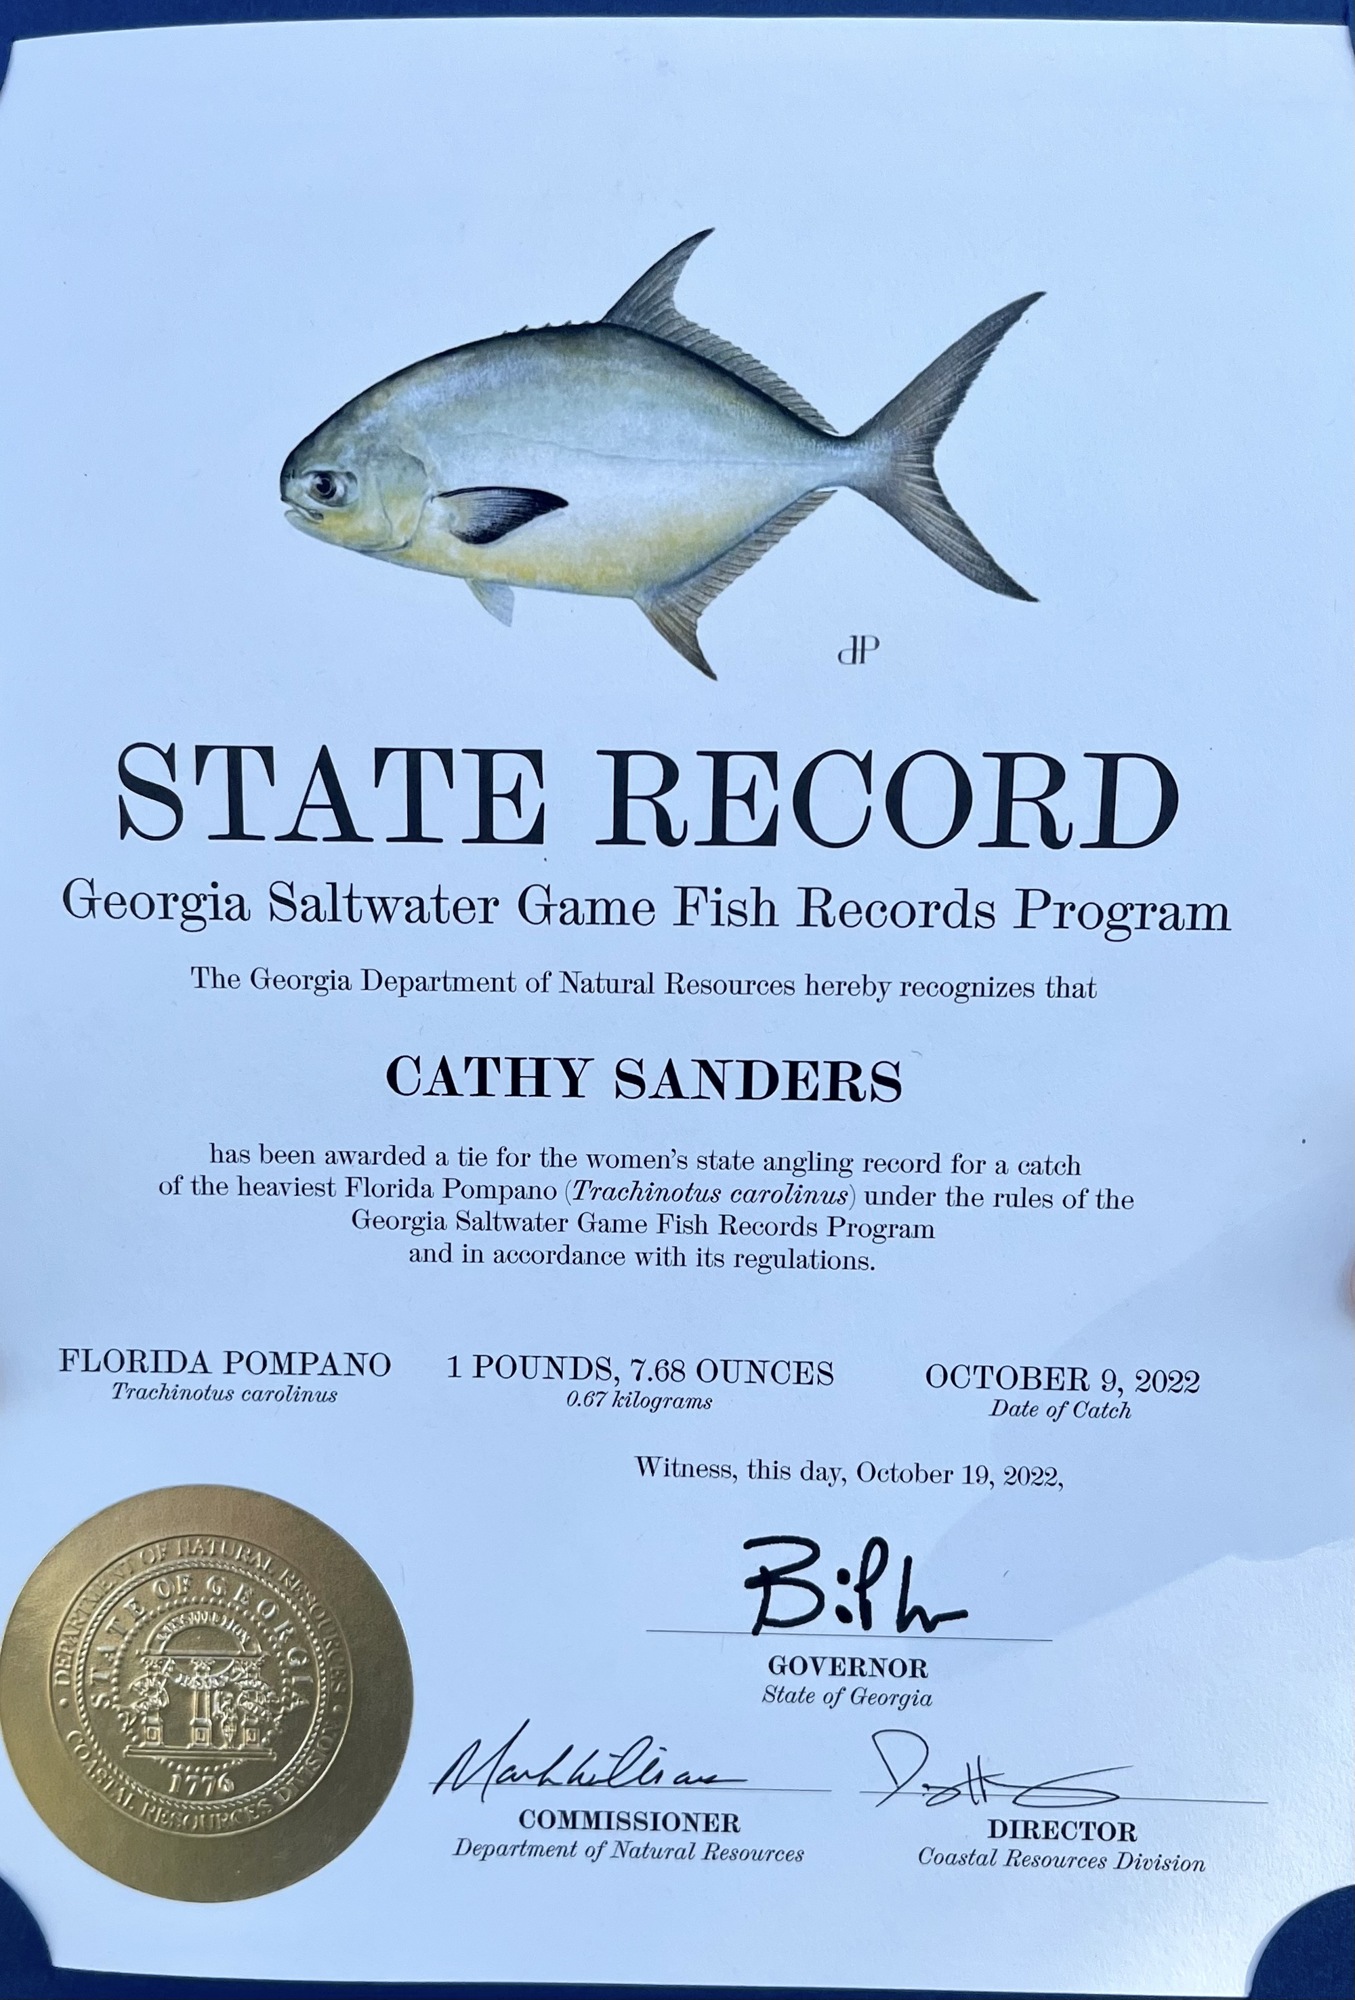 Angler catches Georgia record for Florida pompano, Observer Local News